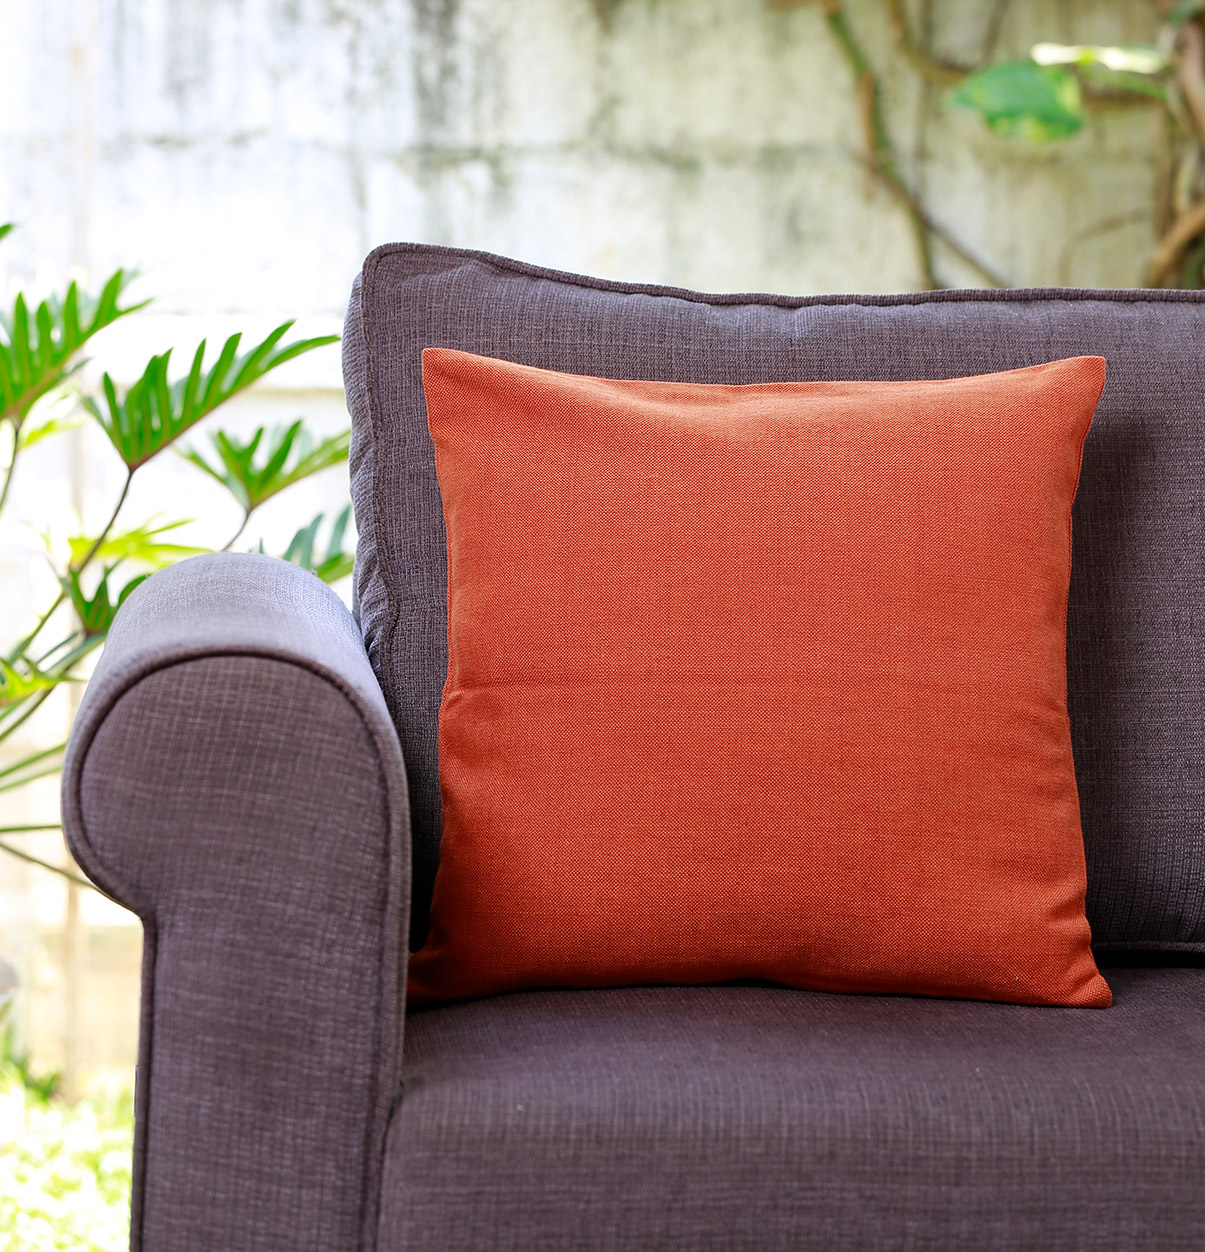 Chambray Cotton Cushion cover Apricot Orange 16″x16″